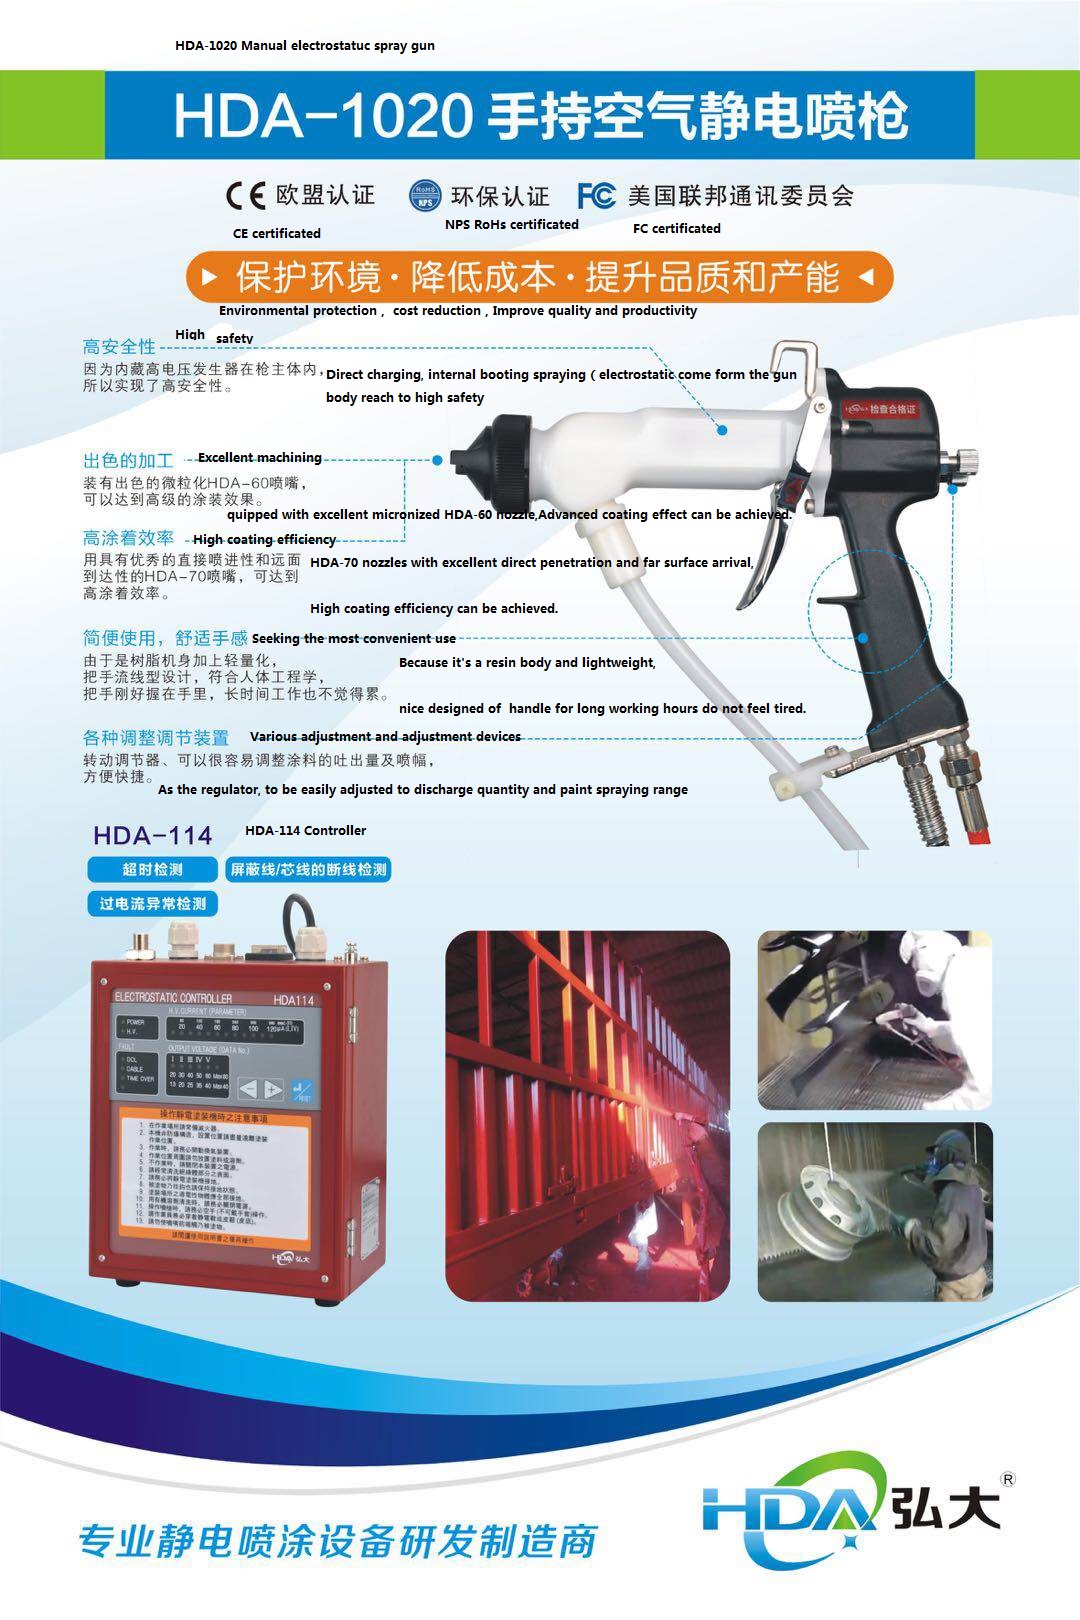 HDA-1020 electrostatic spray gun |hdaspraygun